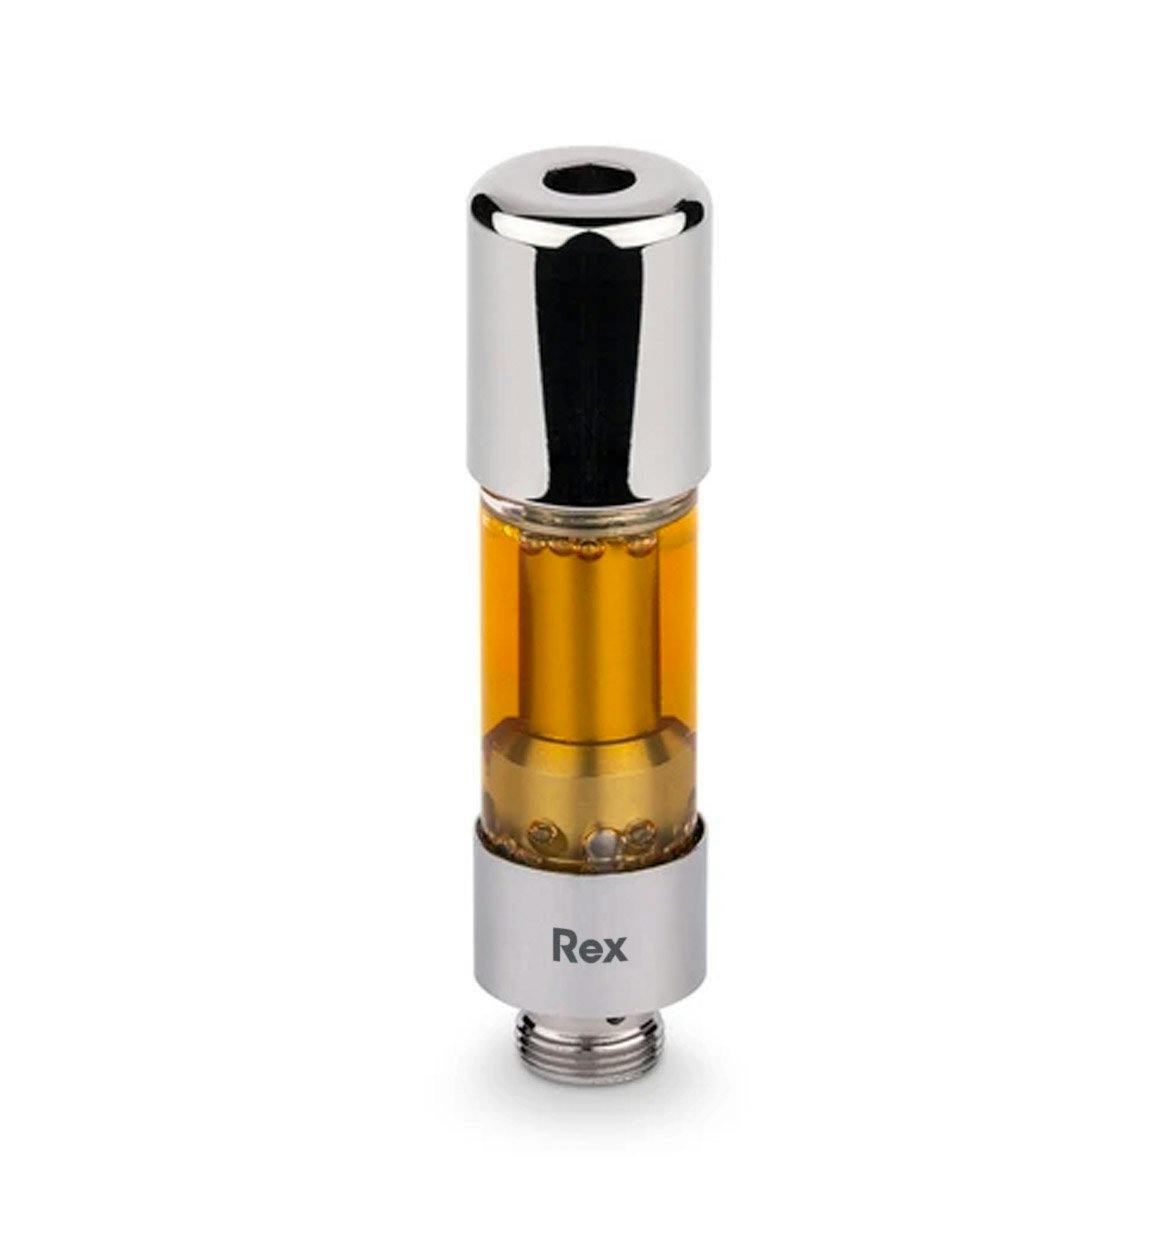 Rex 510 Vape Cartridge